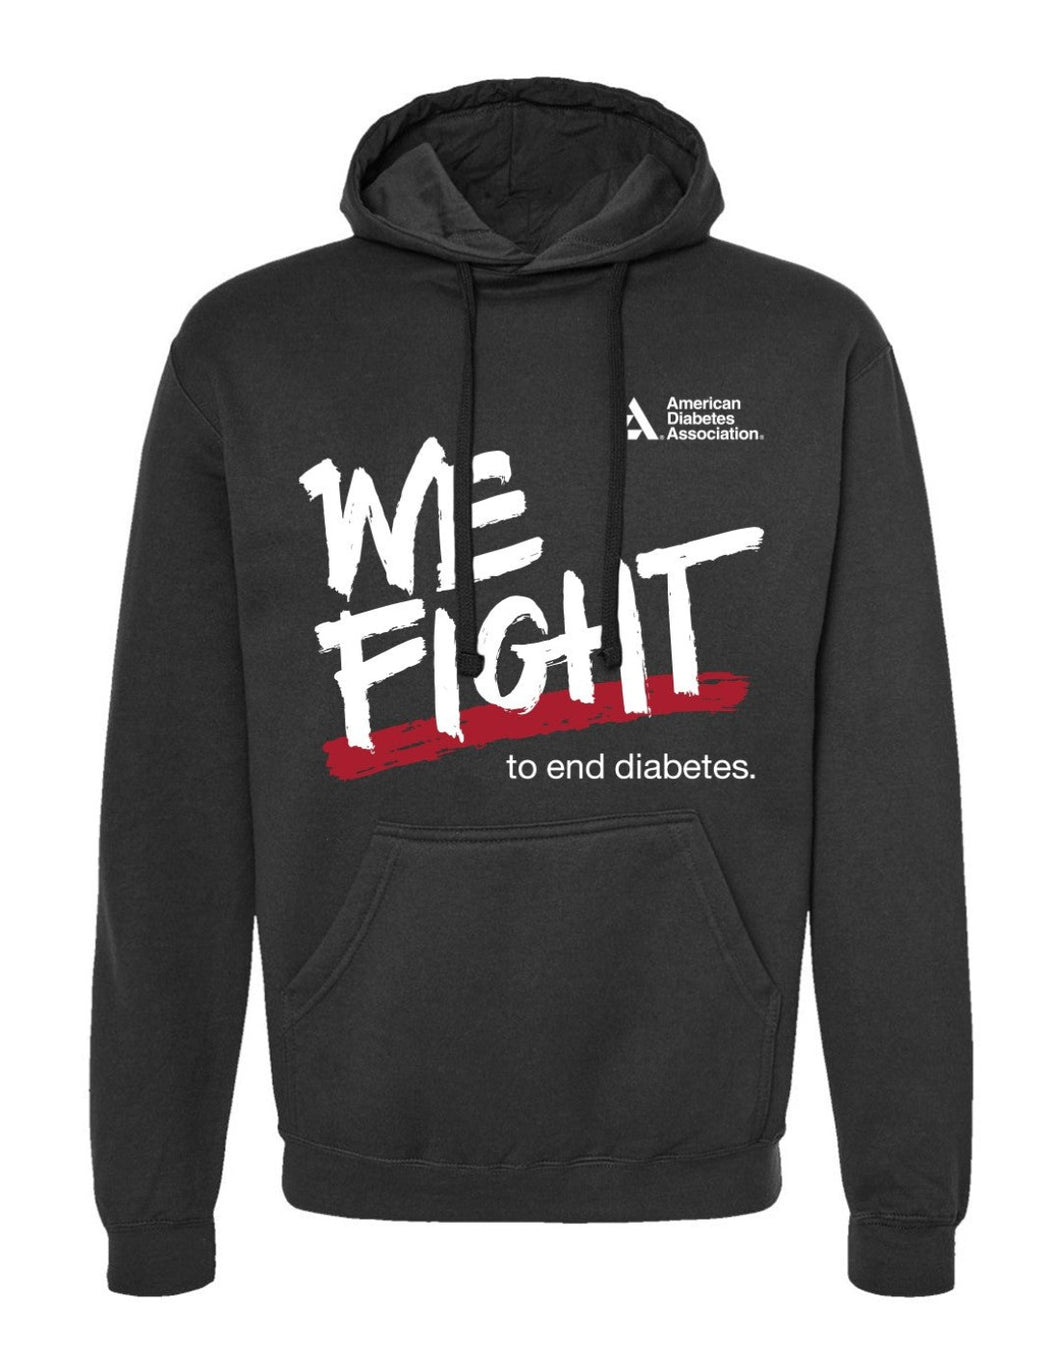 American Diabetes Association We Fight Hoody Sweatshirt